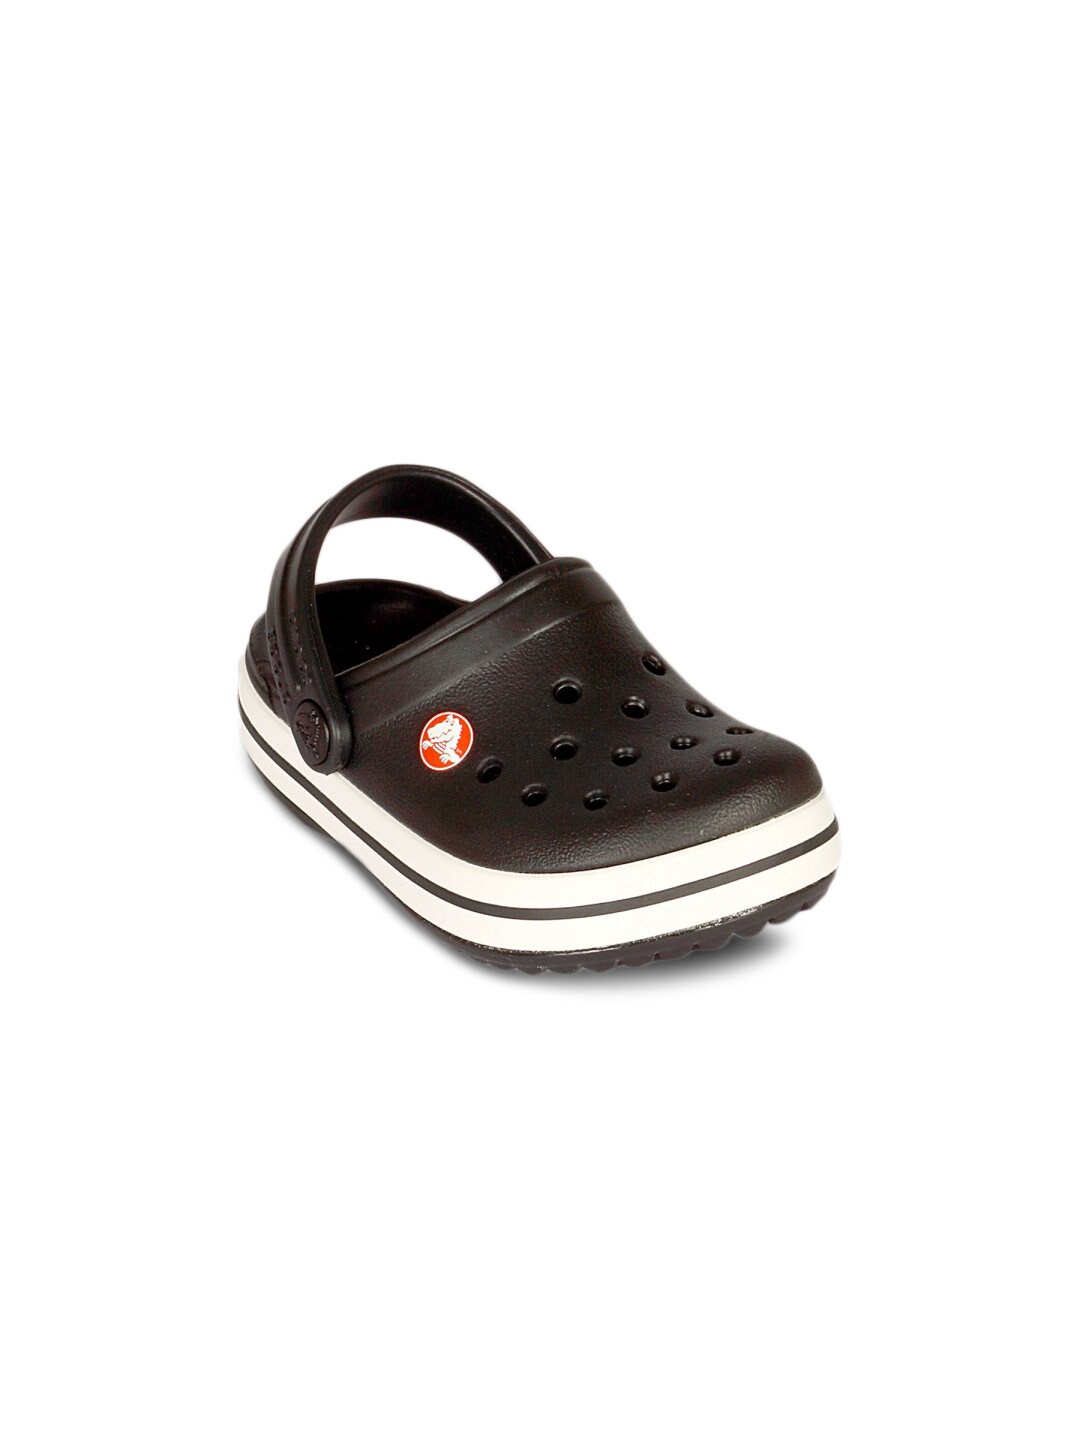 Crocs Kids Crocband Black Sandals